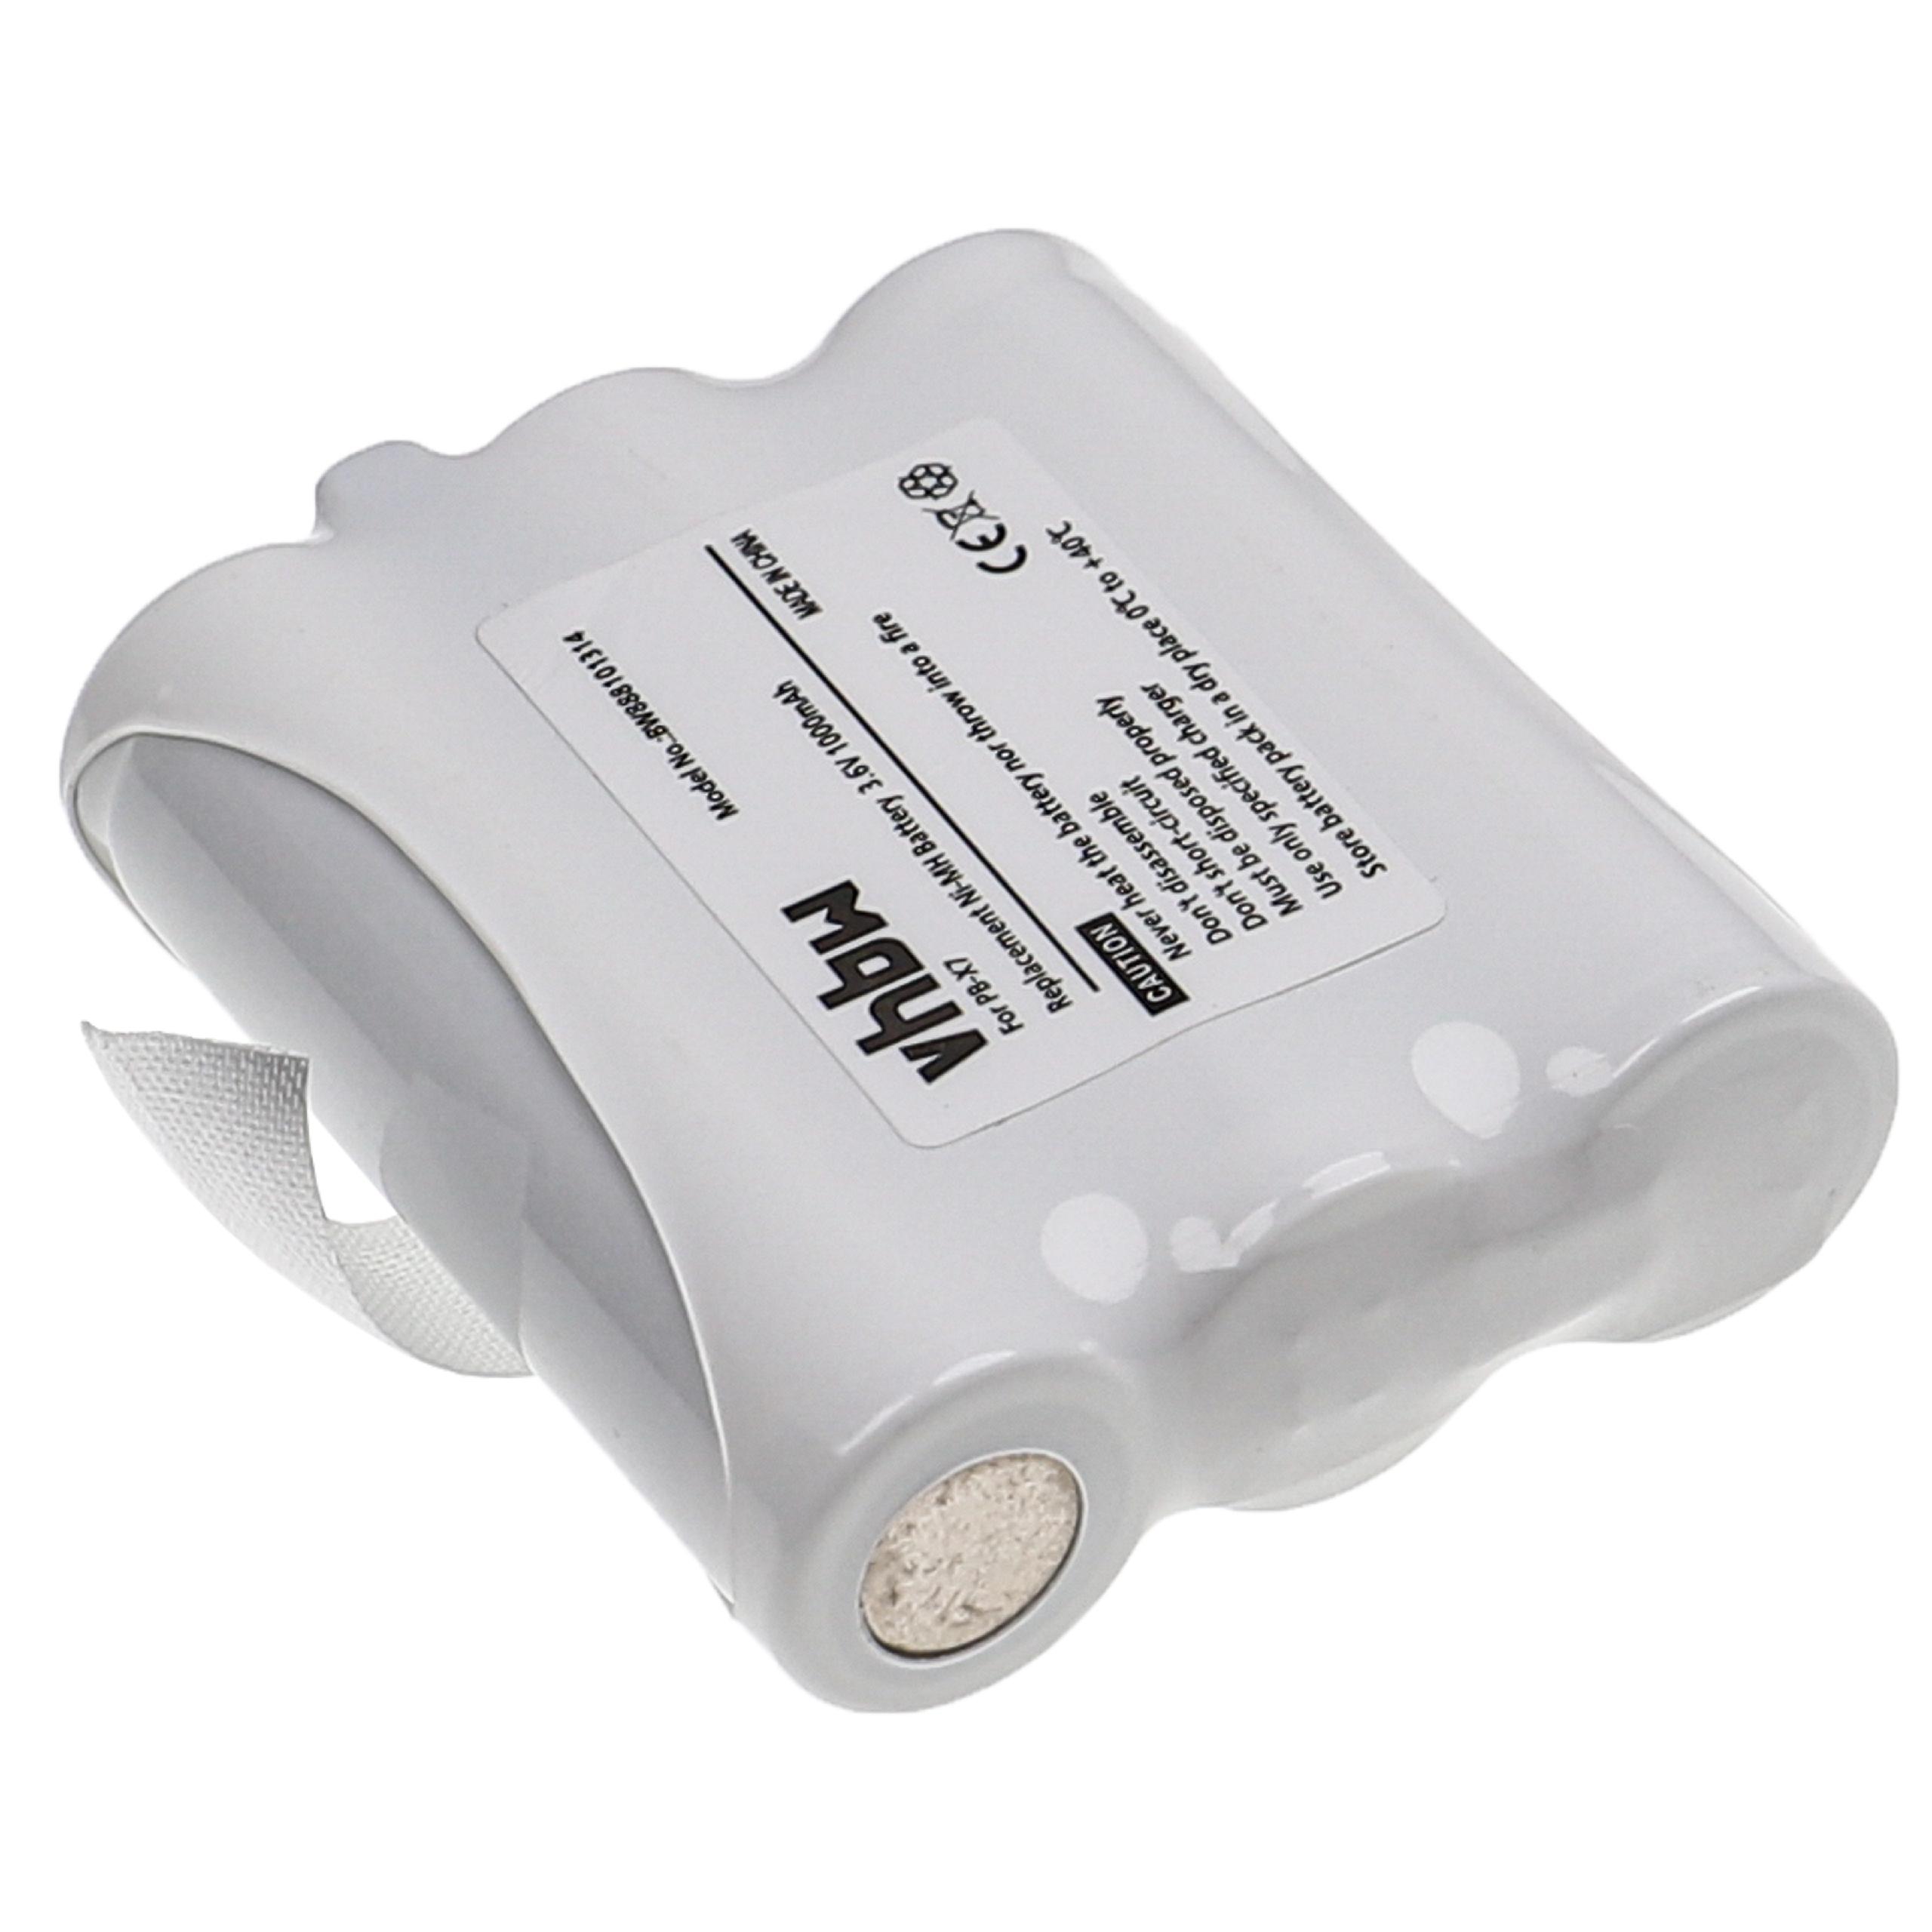 Batterie remplace Midland PB-X7 pour radio talkie-walkie - 1000mAh 3,6V NiMH